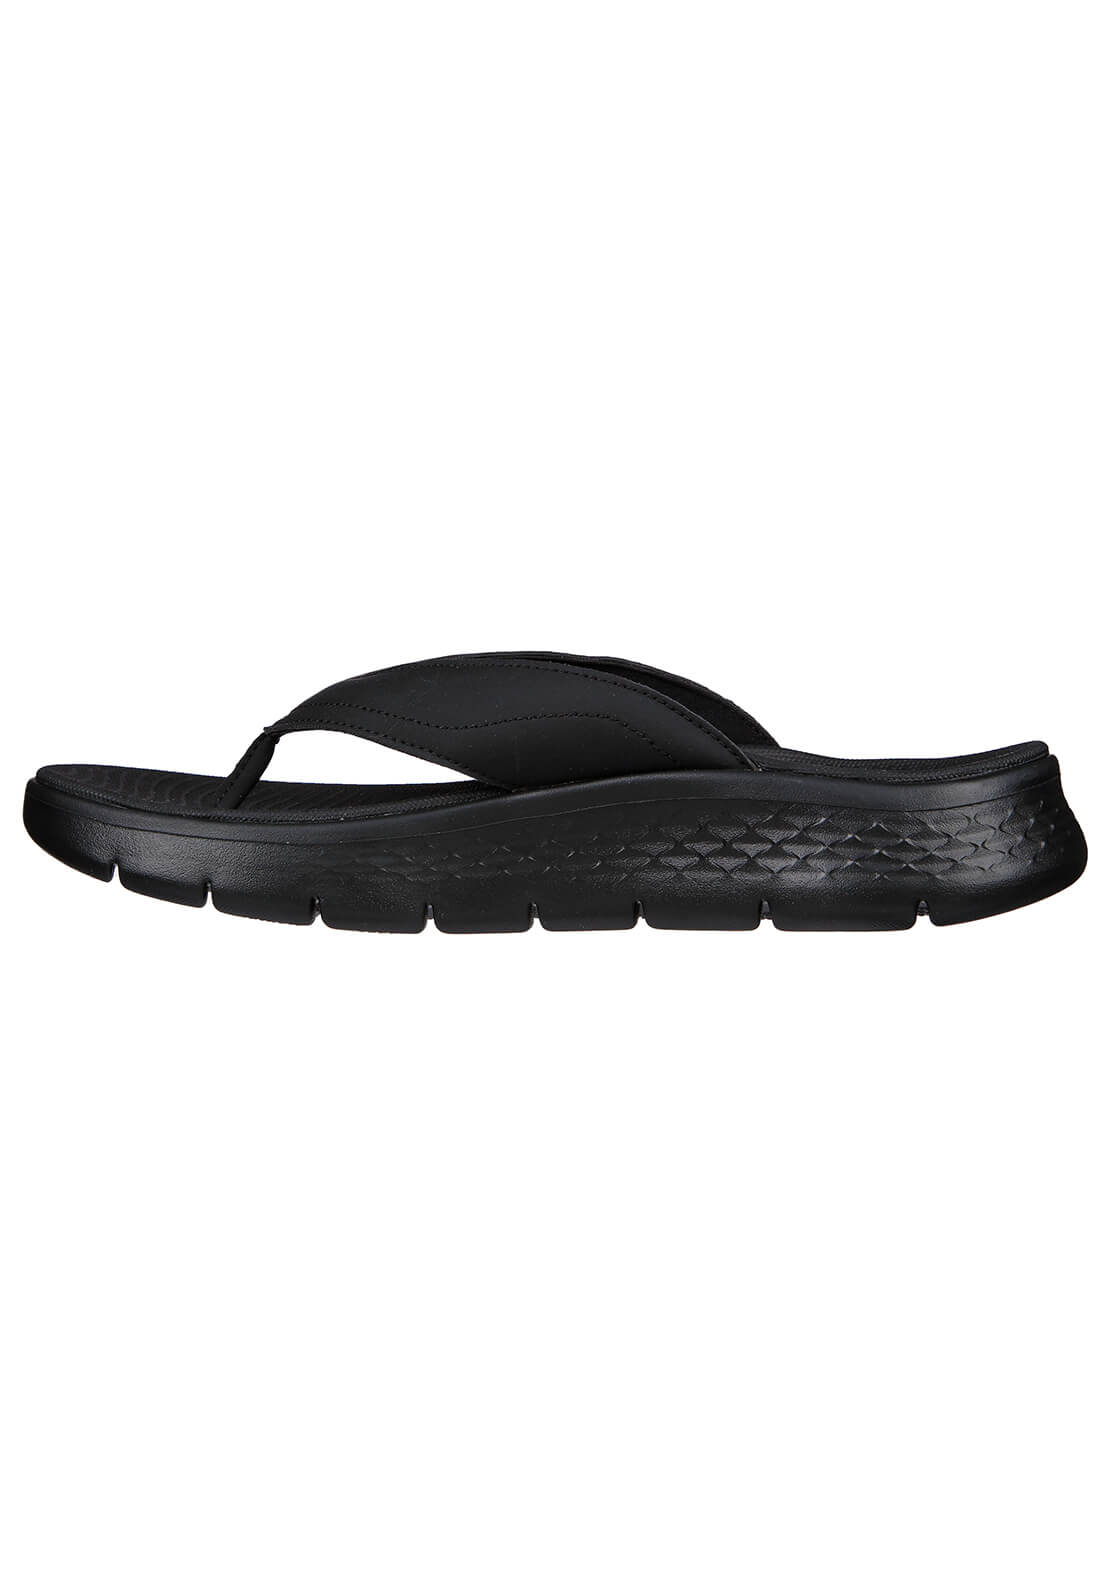 Skechers GO WALK FLEX Sandal Vallejo - Black 2 Shaws Department Stores